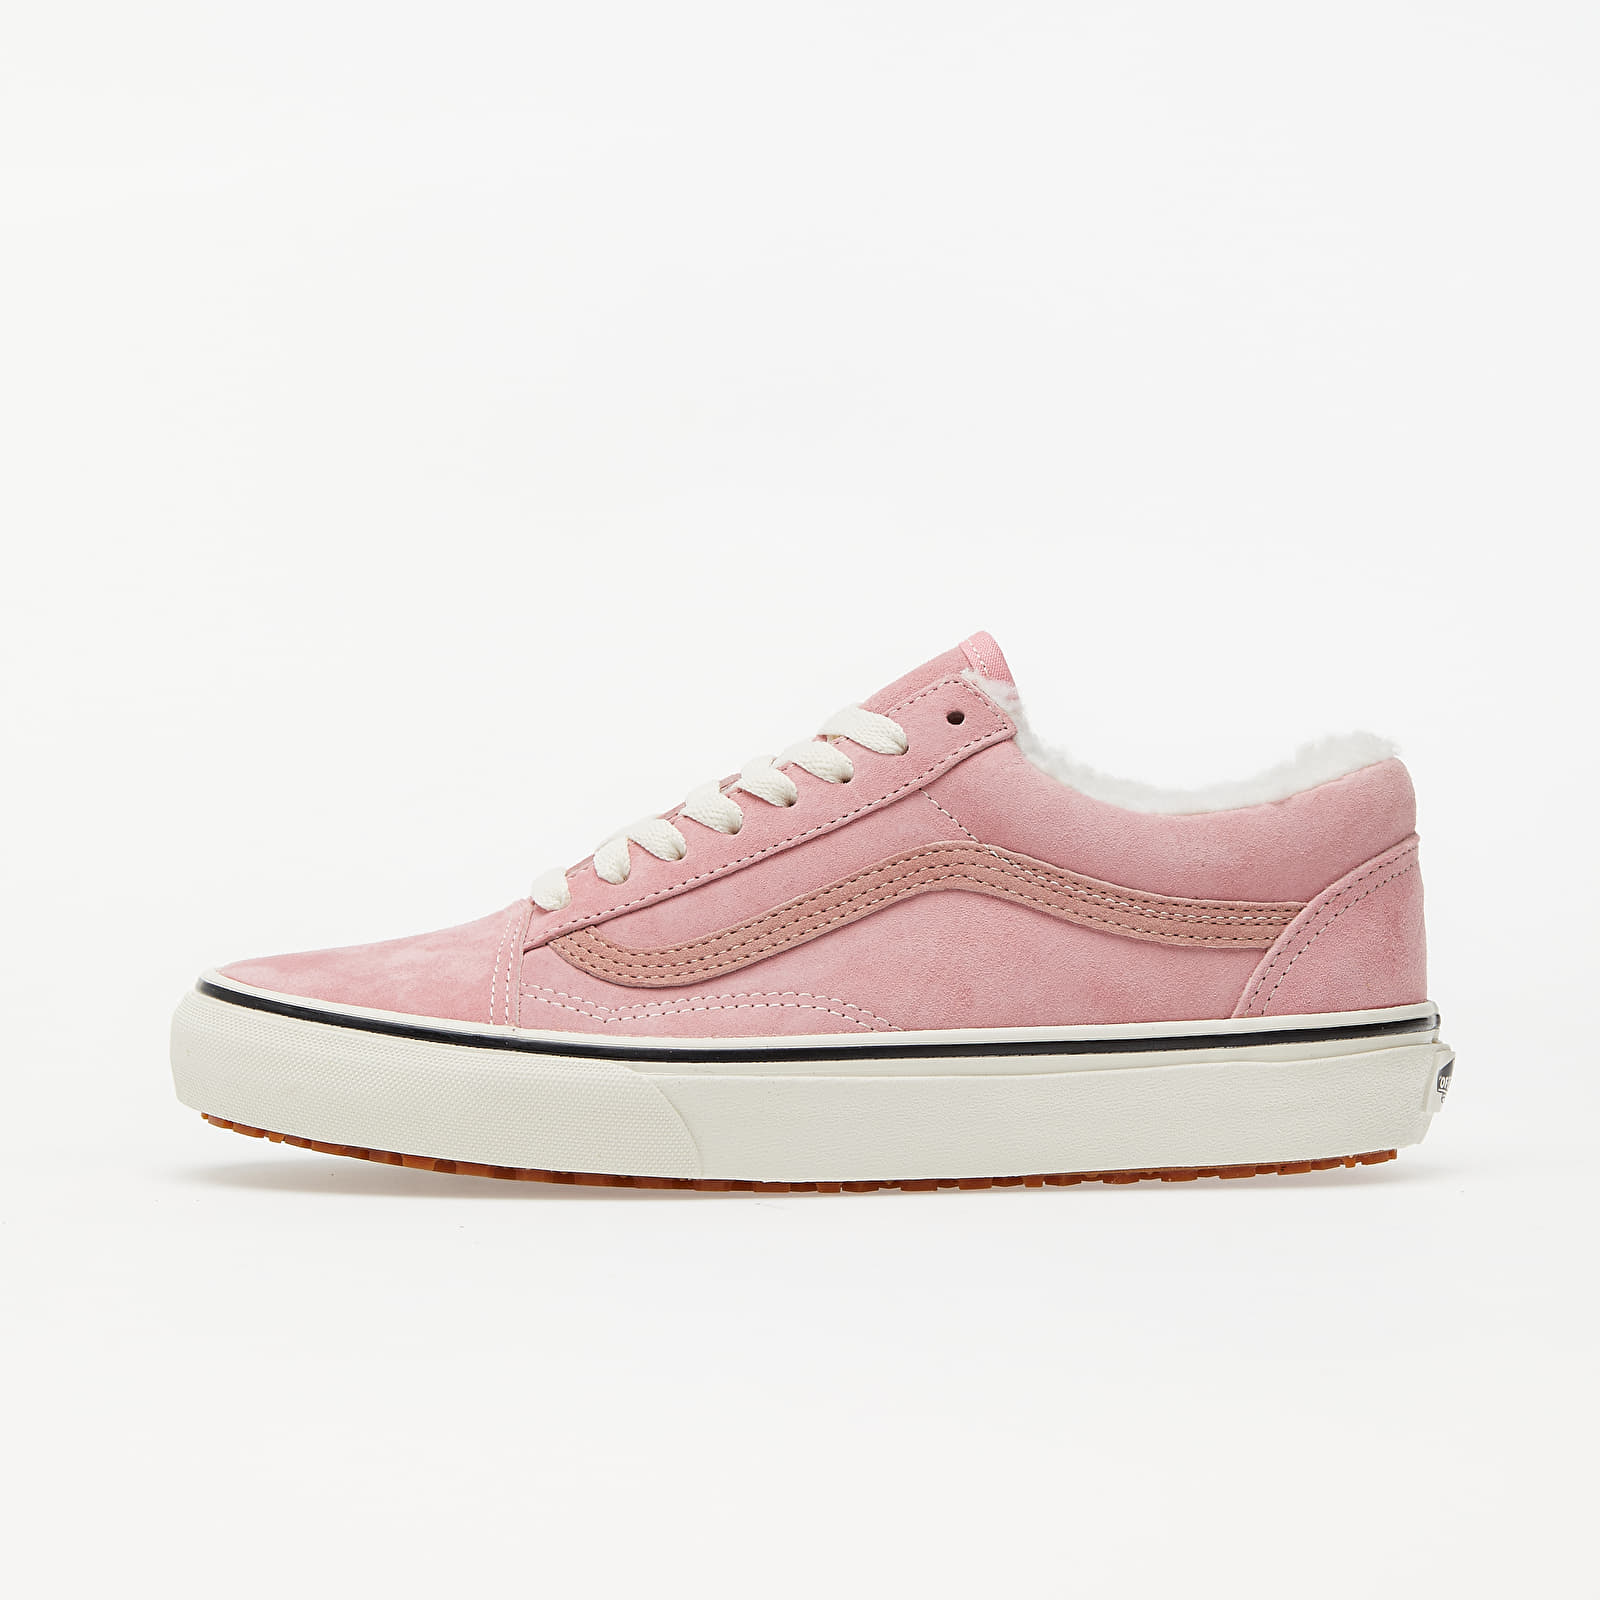 Men's shoes Vans Old Skool MTE (MTE) Nubuck/ Flamingo Pink